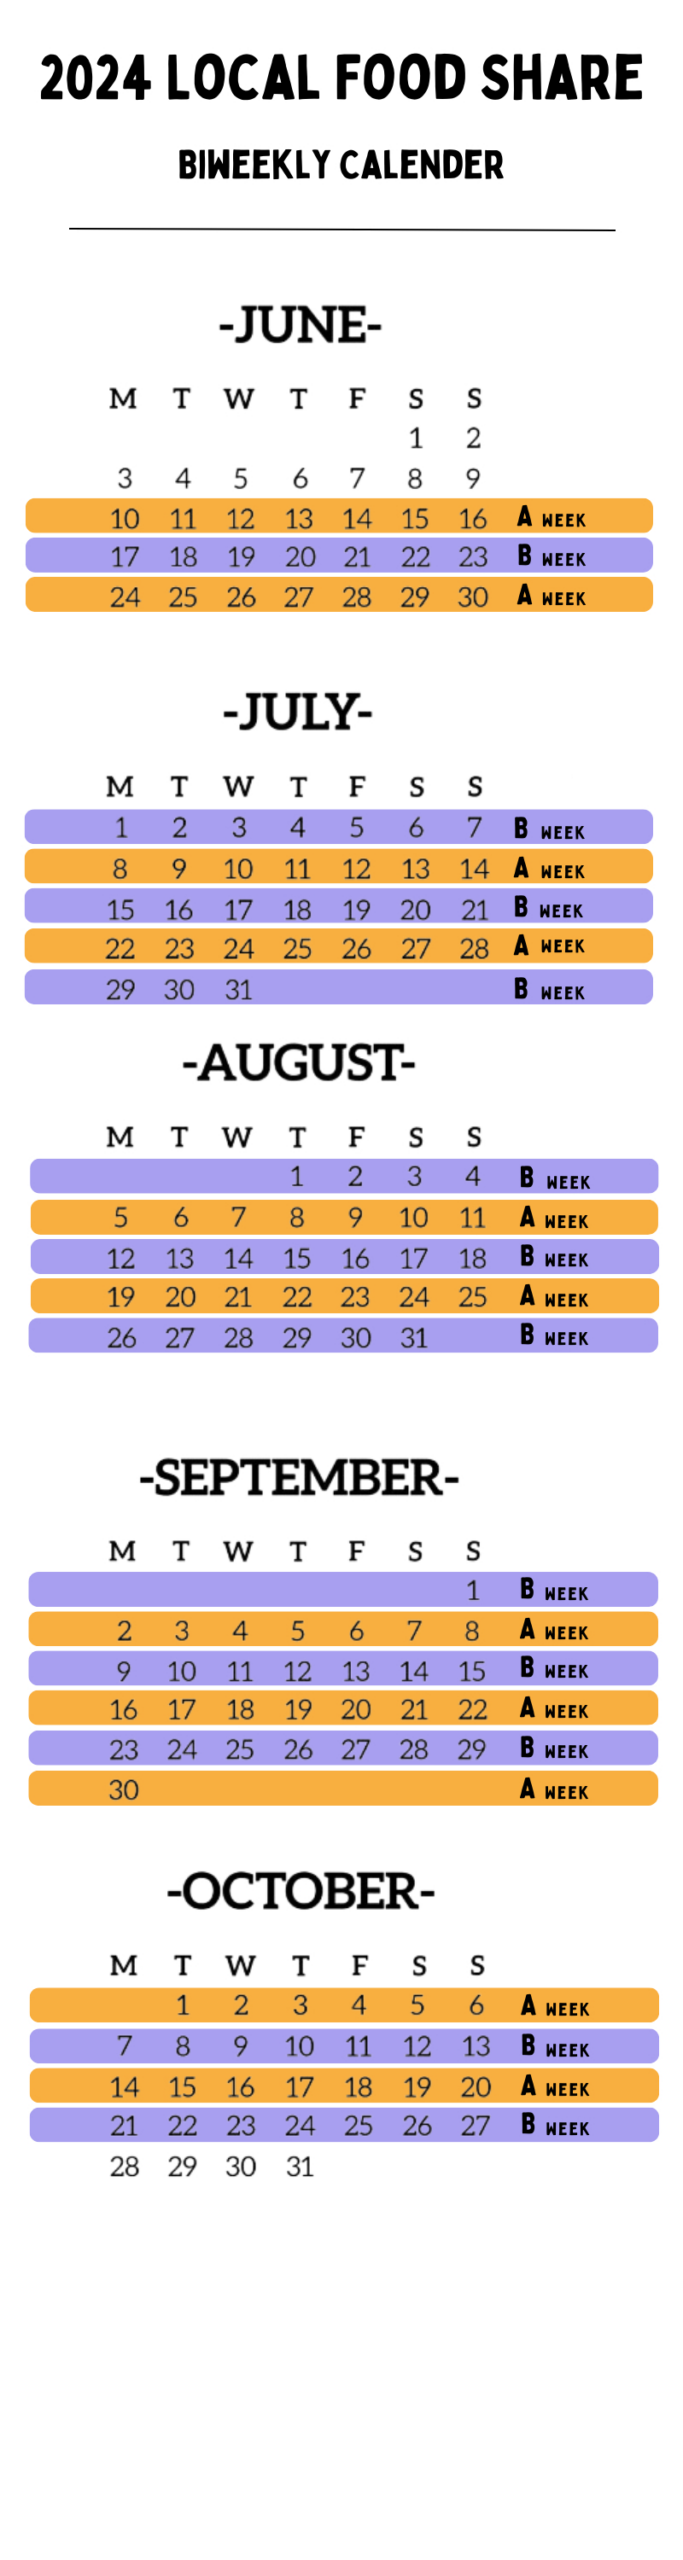 Biweekly Calendar - 2024 Local Food Share intended for Ebt Calendar For July 2024